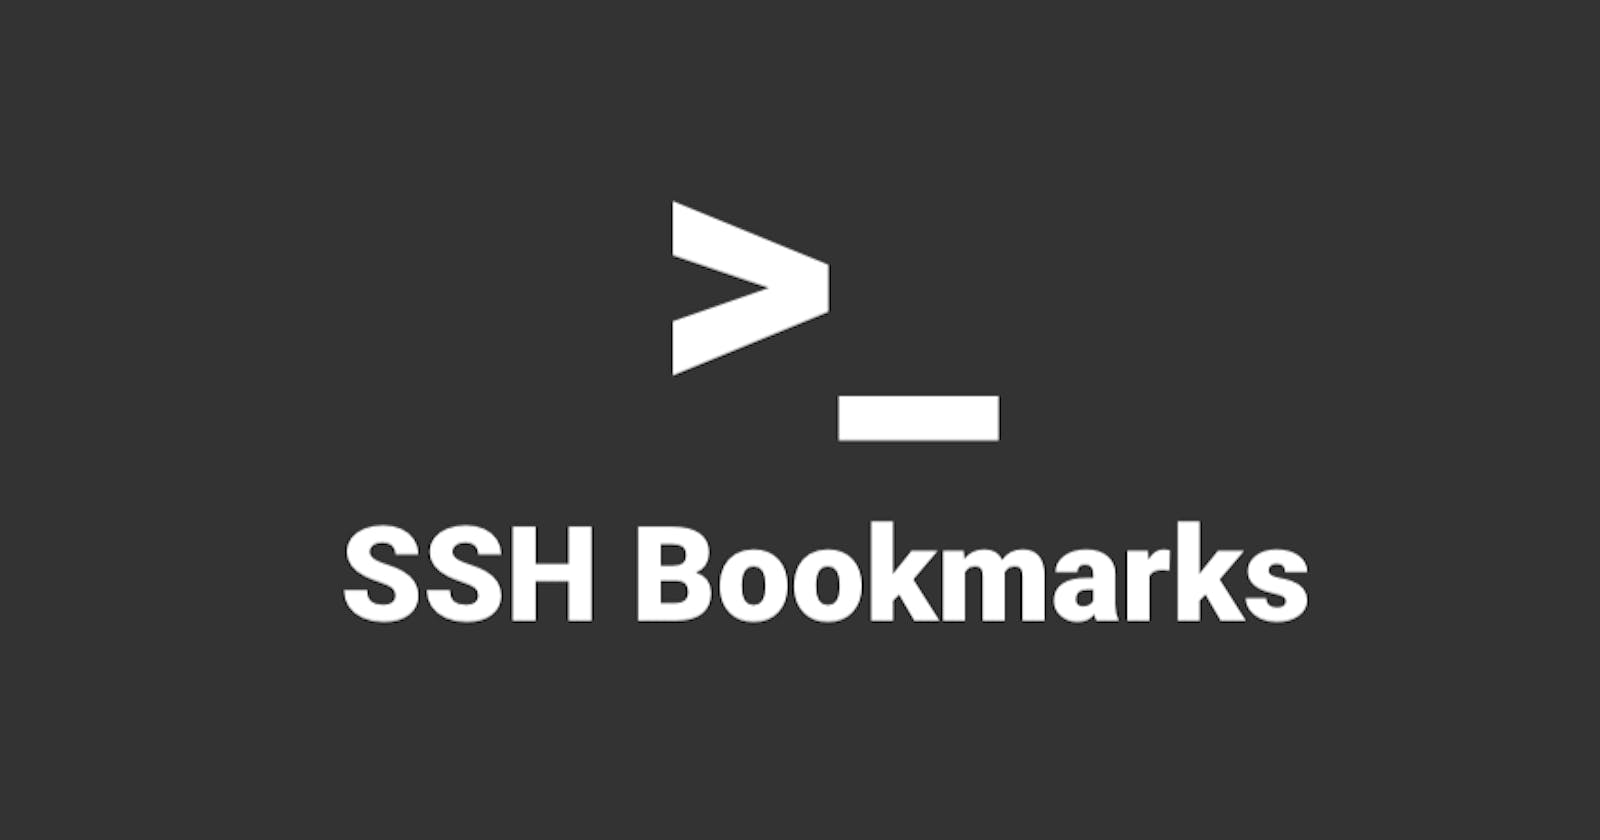 SSH Bookmarks